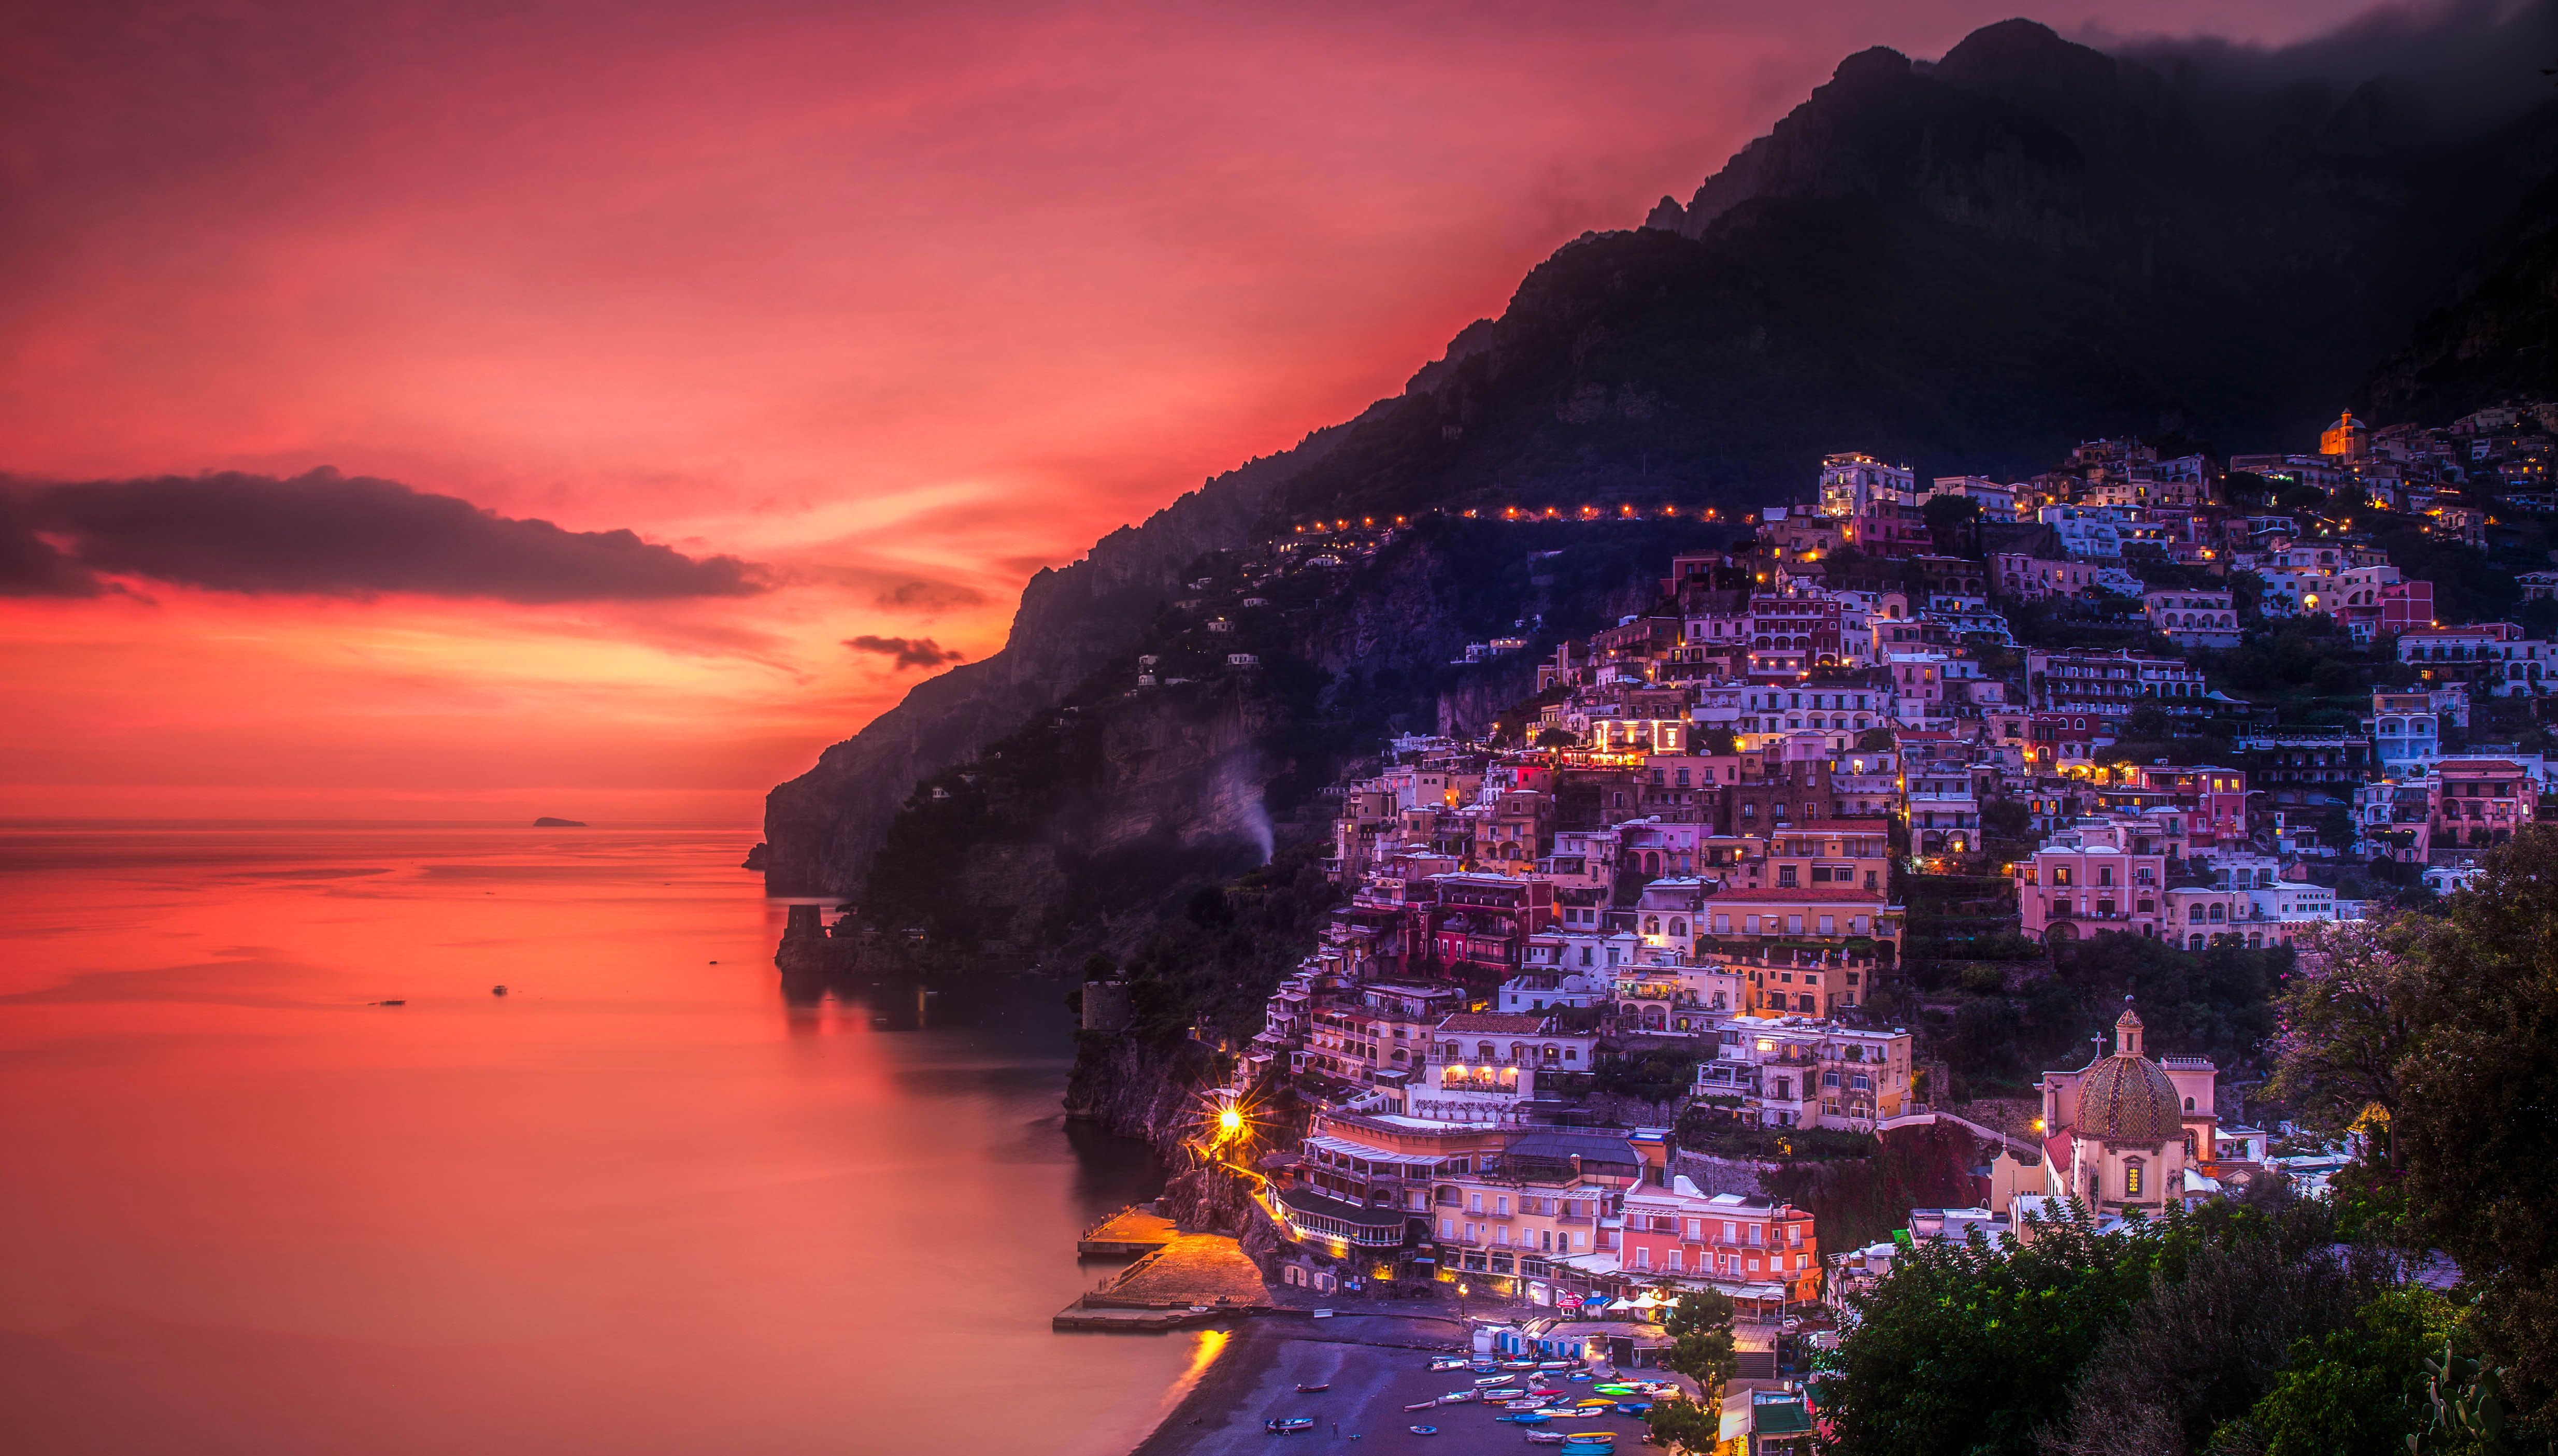 Positano, Italy Sunset 4k Ultra HD Wallpaper. Background Image